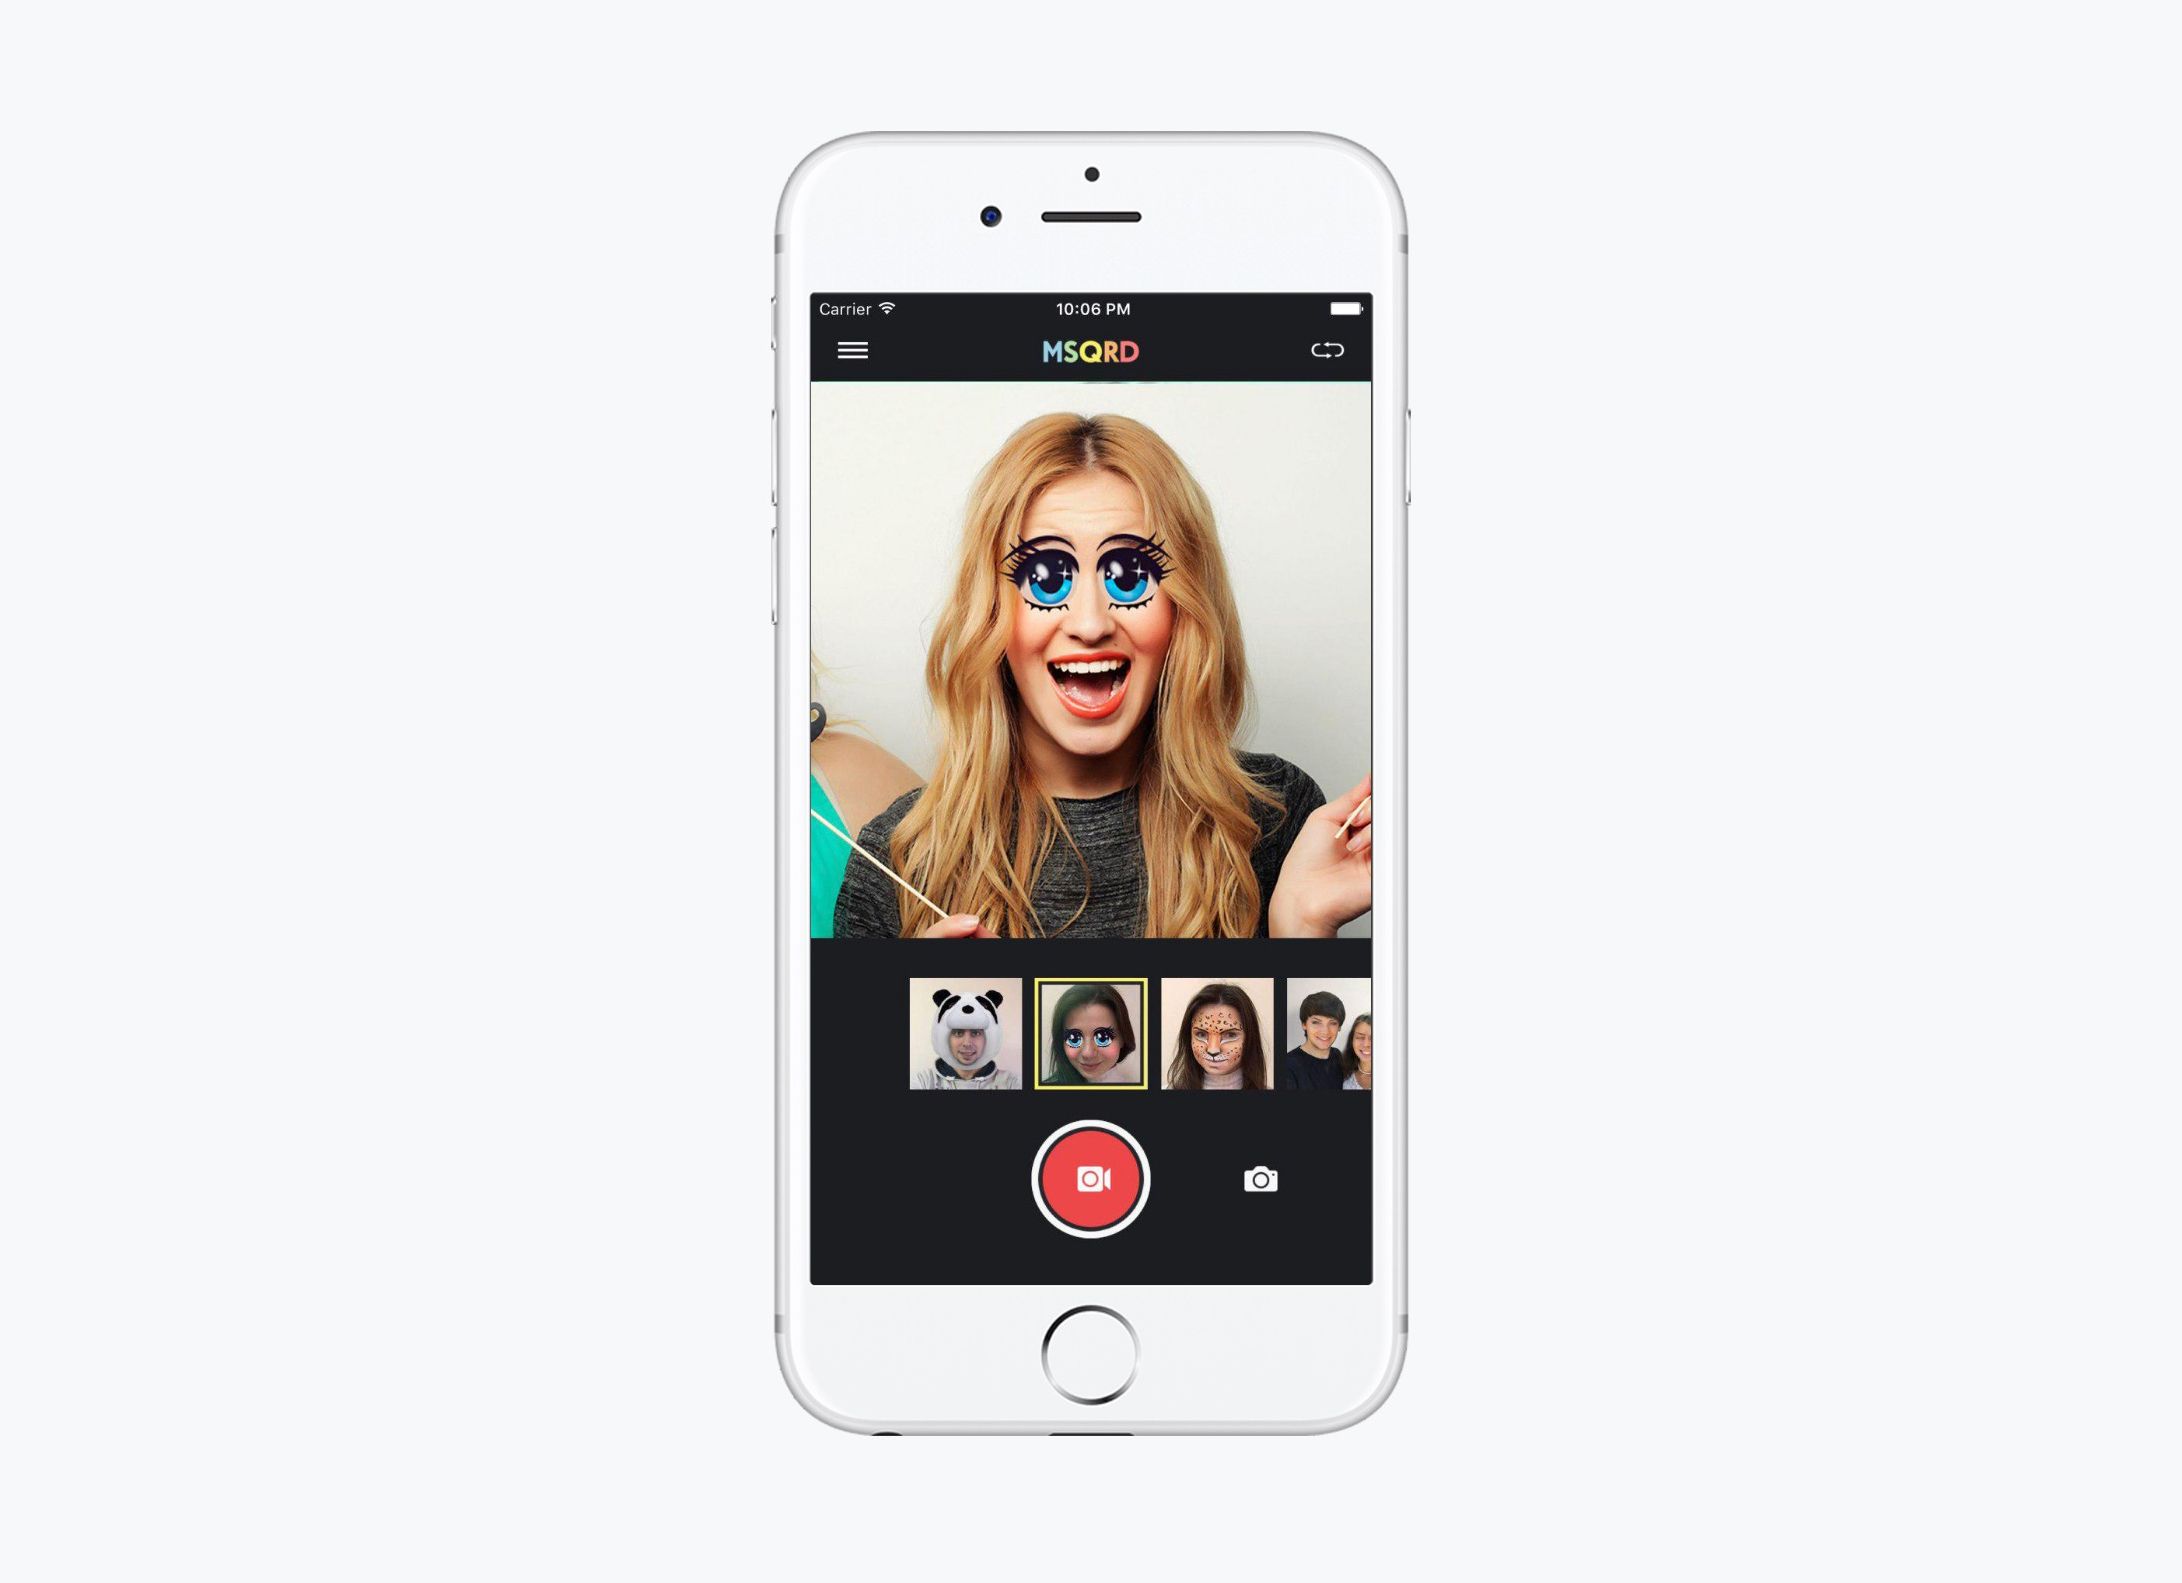 facebook live to offer snapchat like lenses through msqrd app image 1